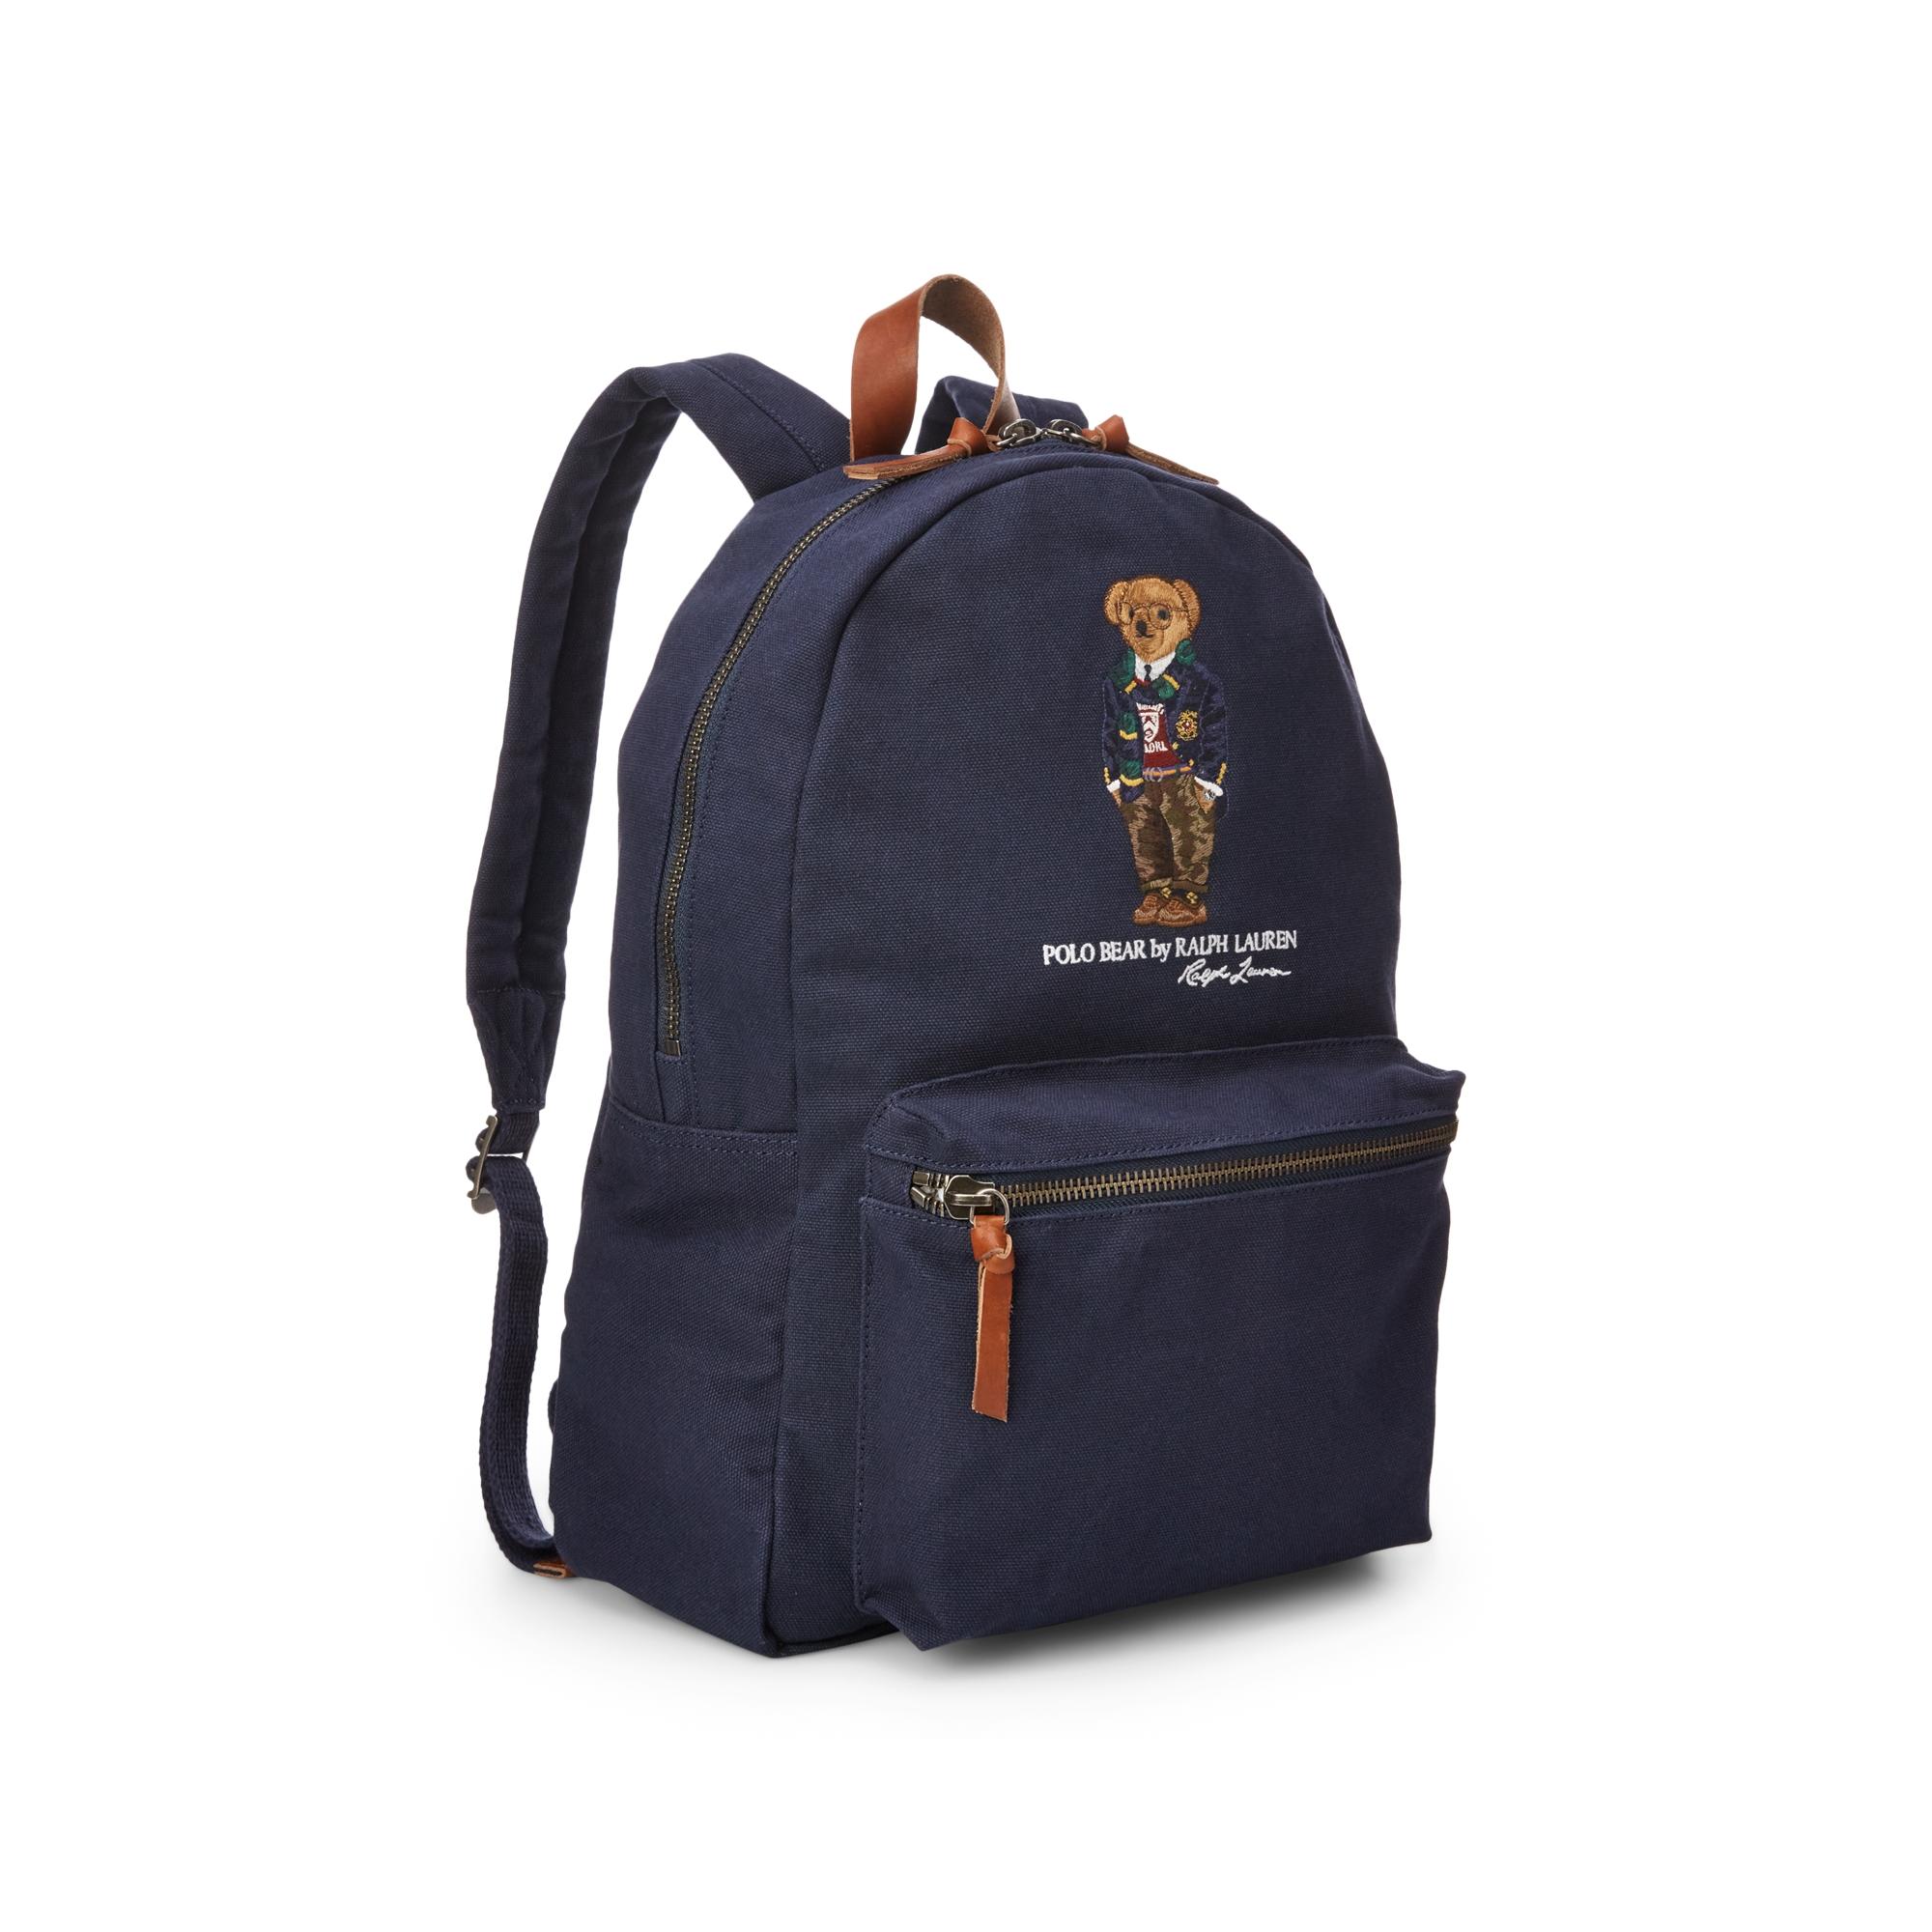 Polo Ralph Lauren Backpack Oultet Website, Save 56% | jlcatj.gob.mx